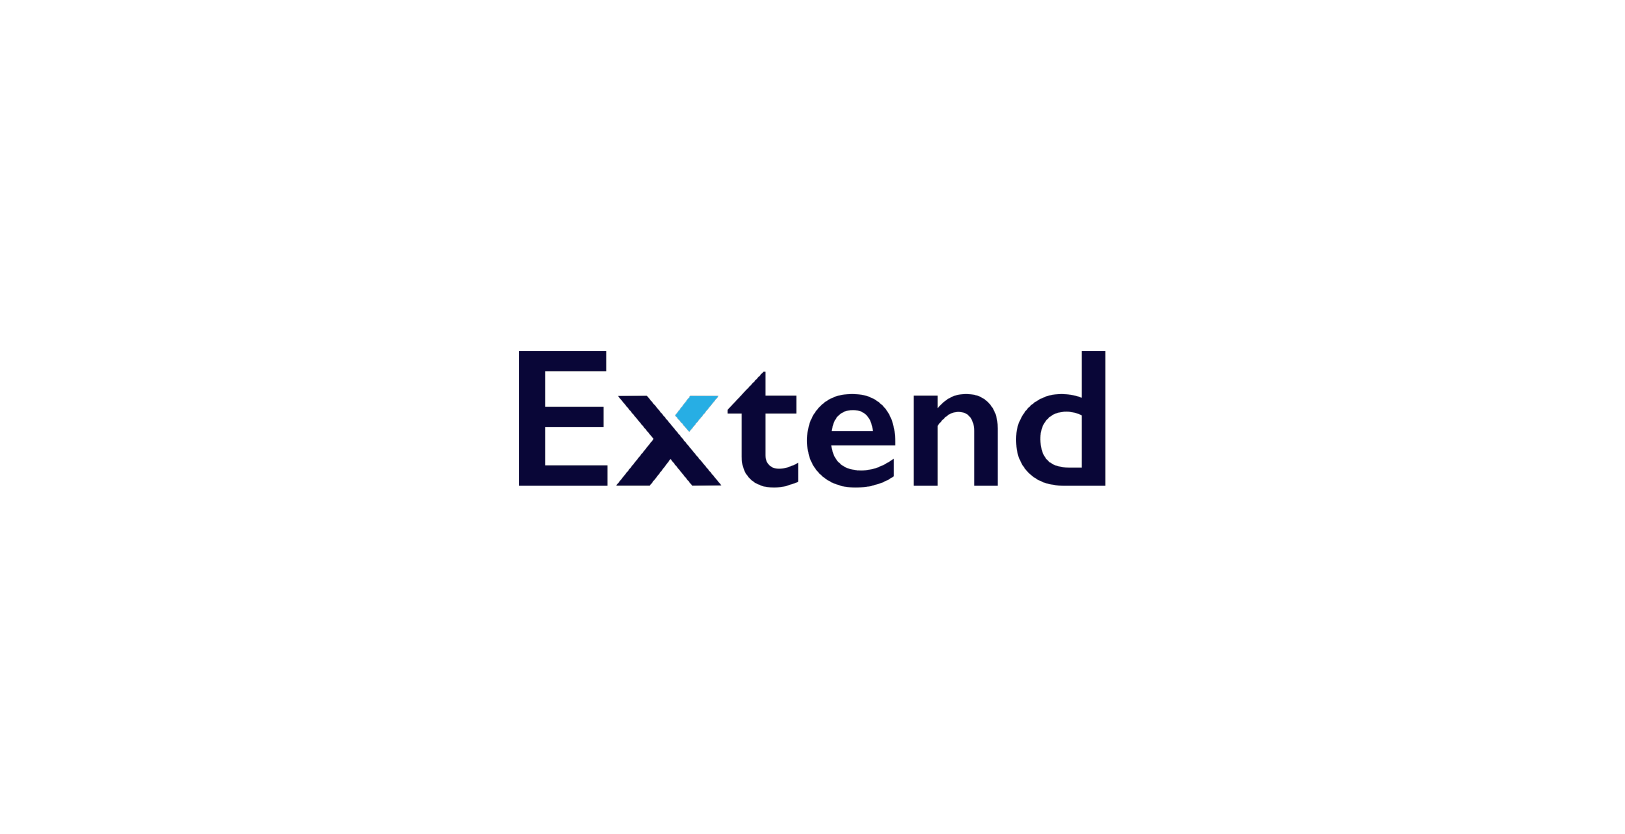 Vision Fund investment portfolio company Extend's logo